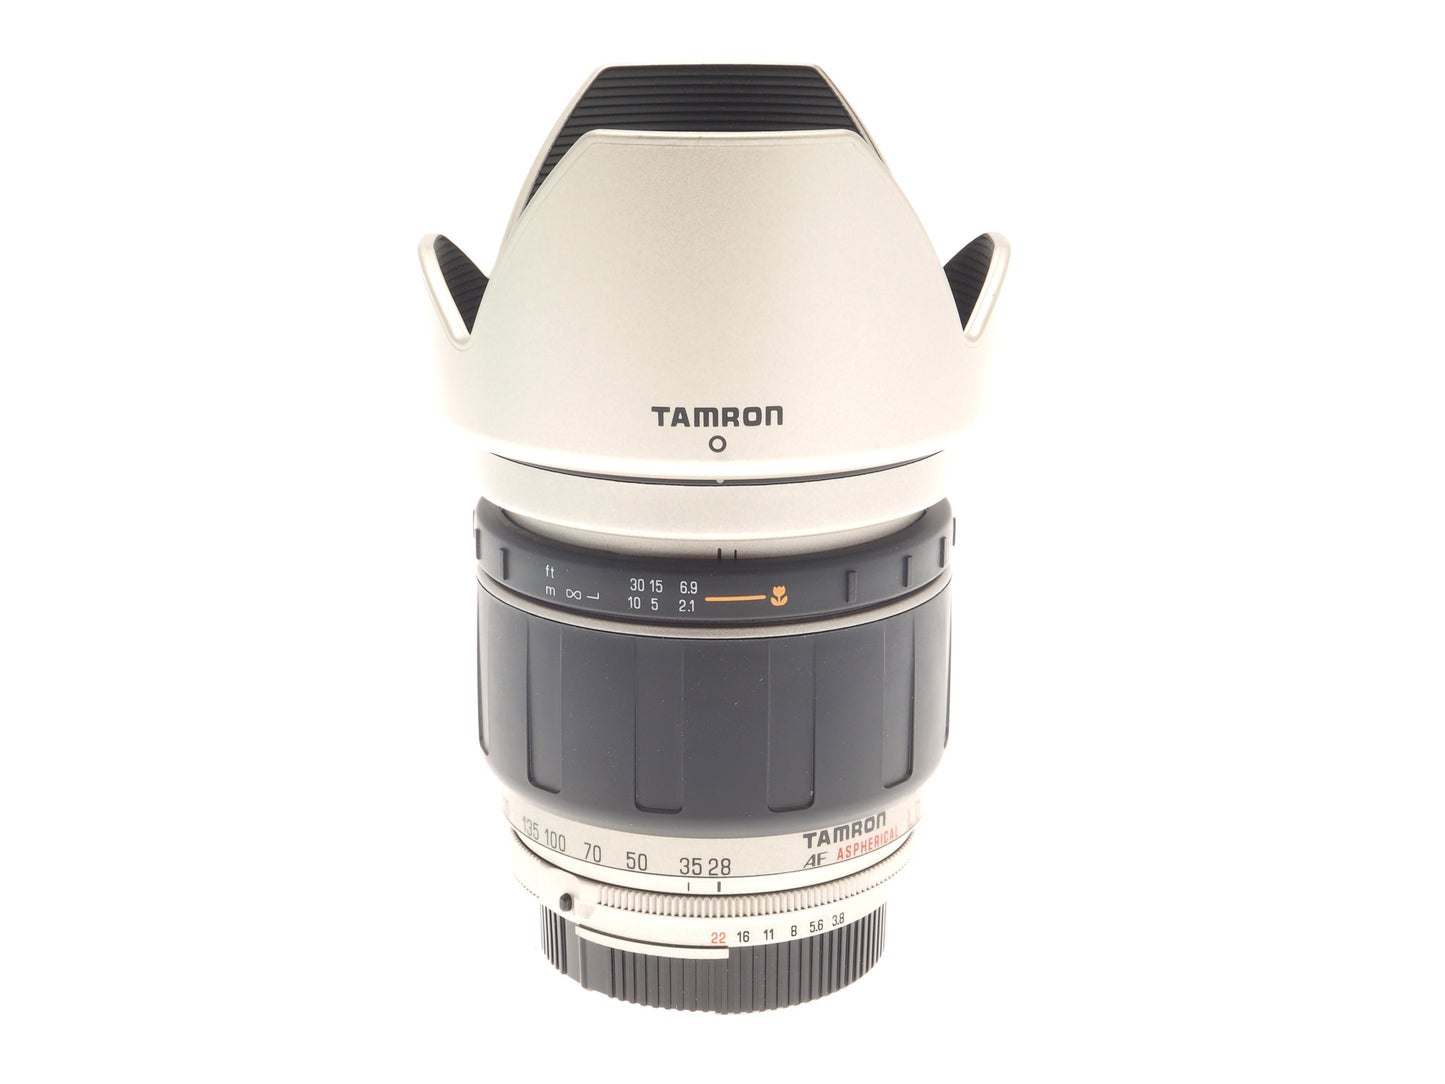 Tamron 28-200mm f3.8-5.6 LD Aspherical (IF) Super (271DN) - Lens